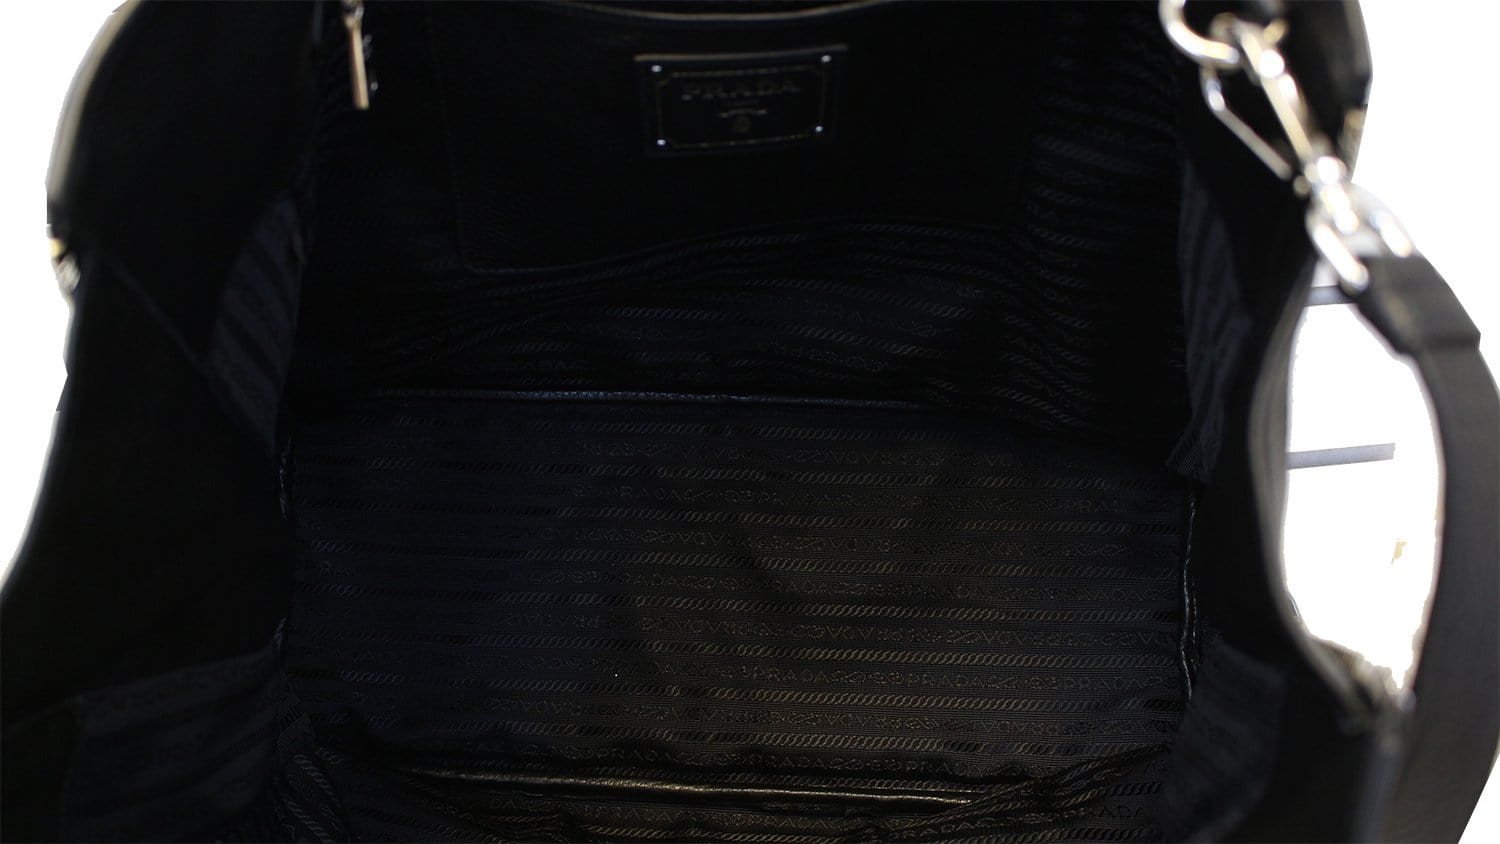 Prada Vitello Phenix Leather Shopping Tote Bag